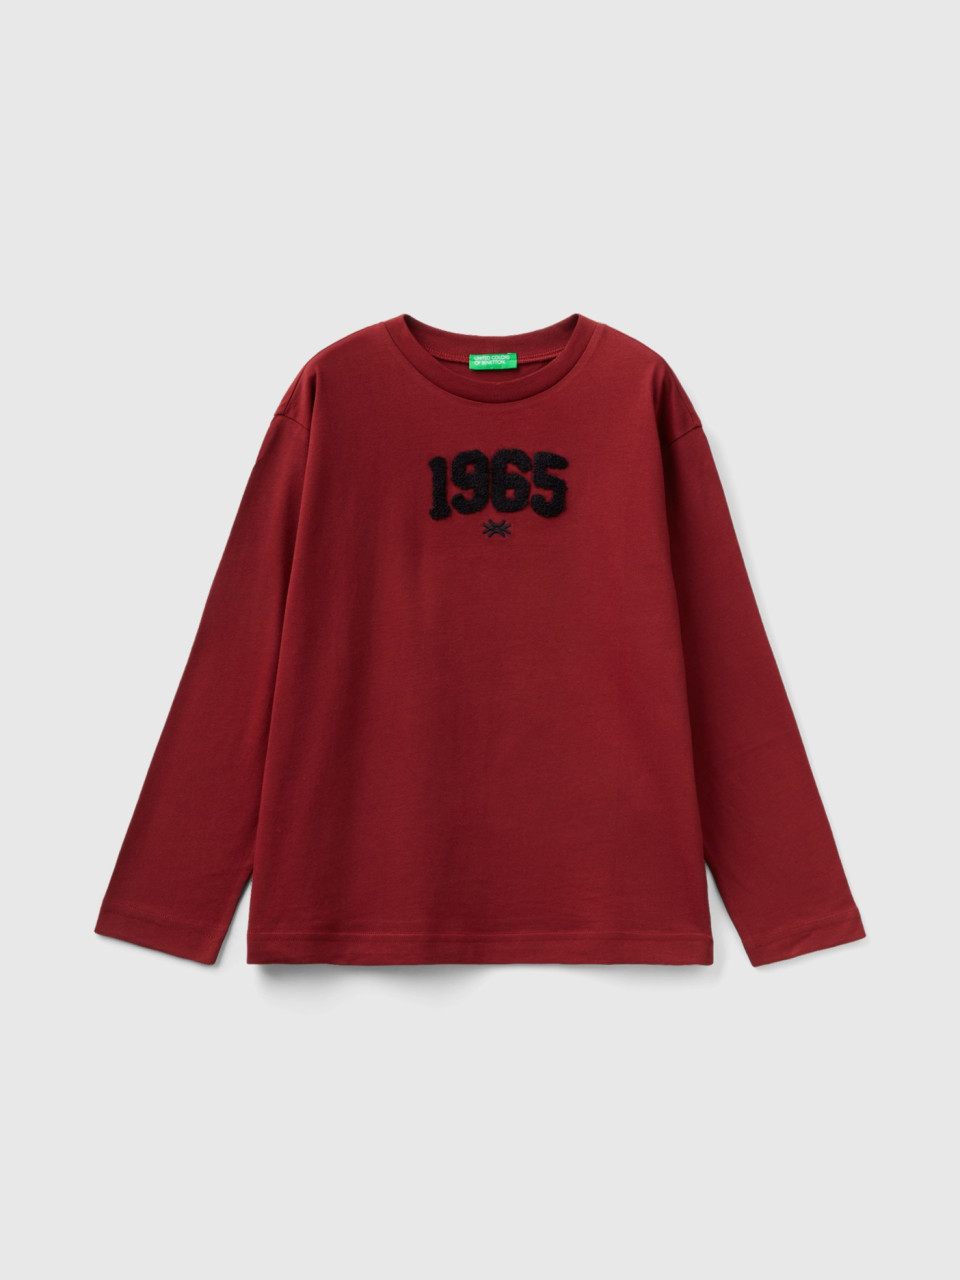 Benetton, Warm 100% Organic Cotton T-shirt, Red, Kids